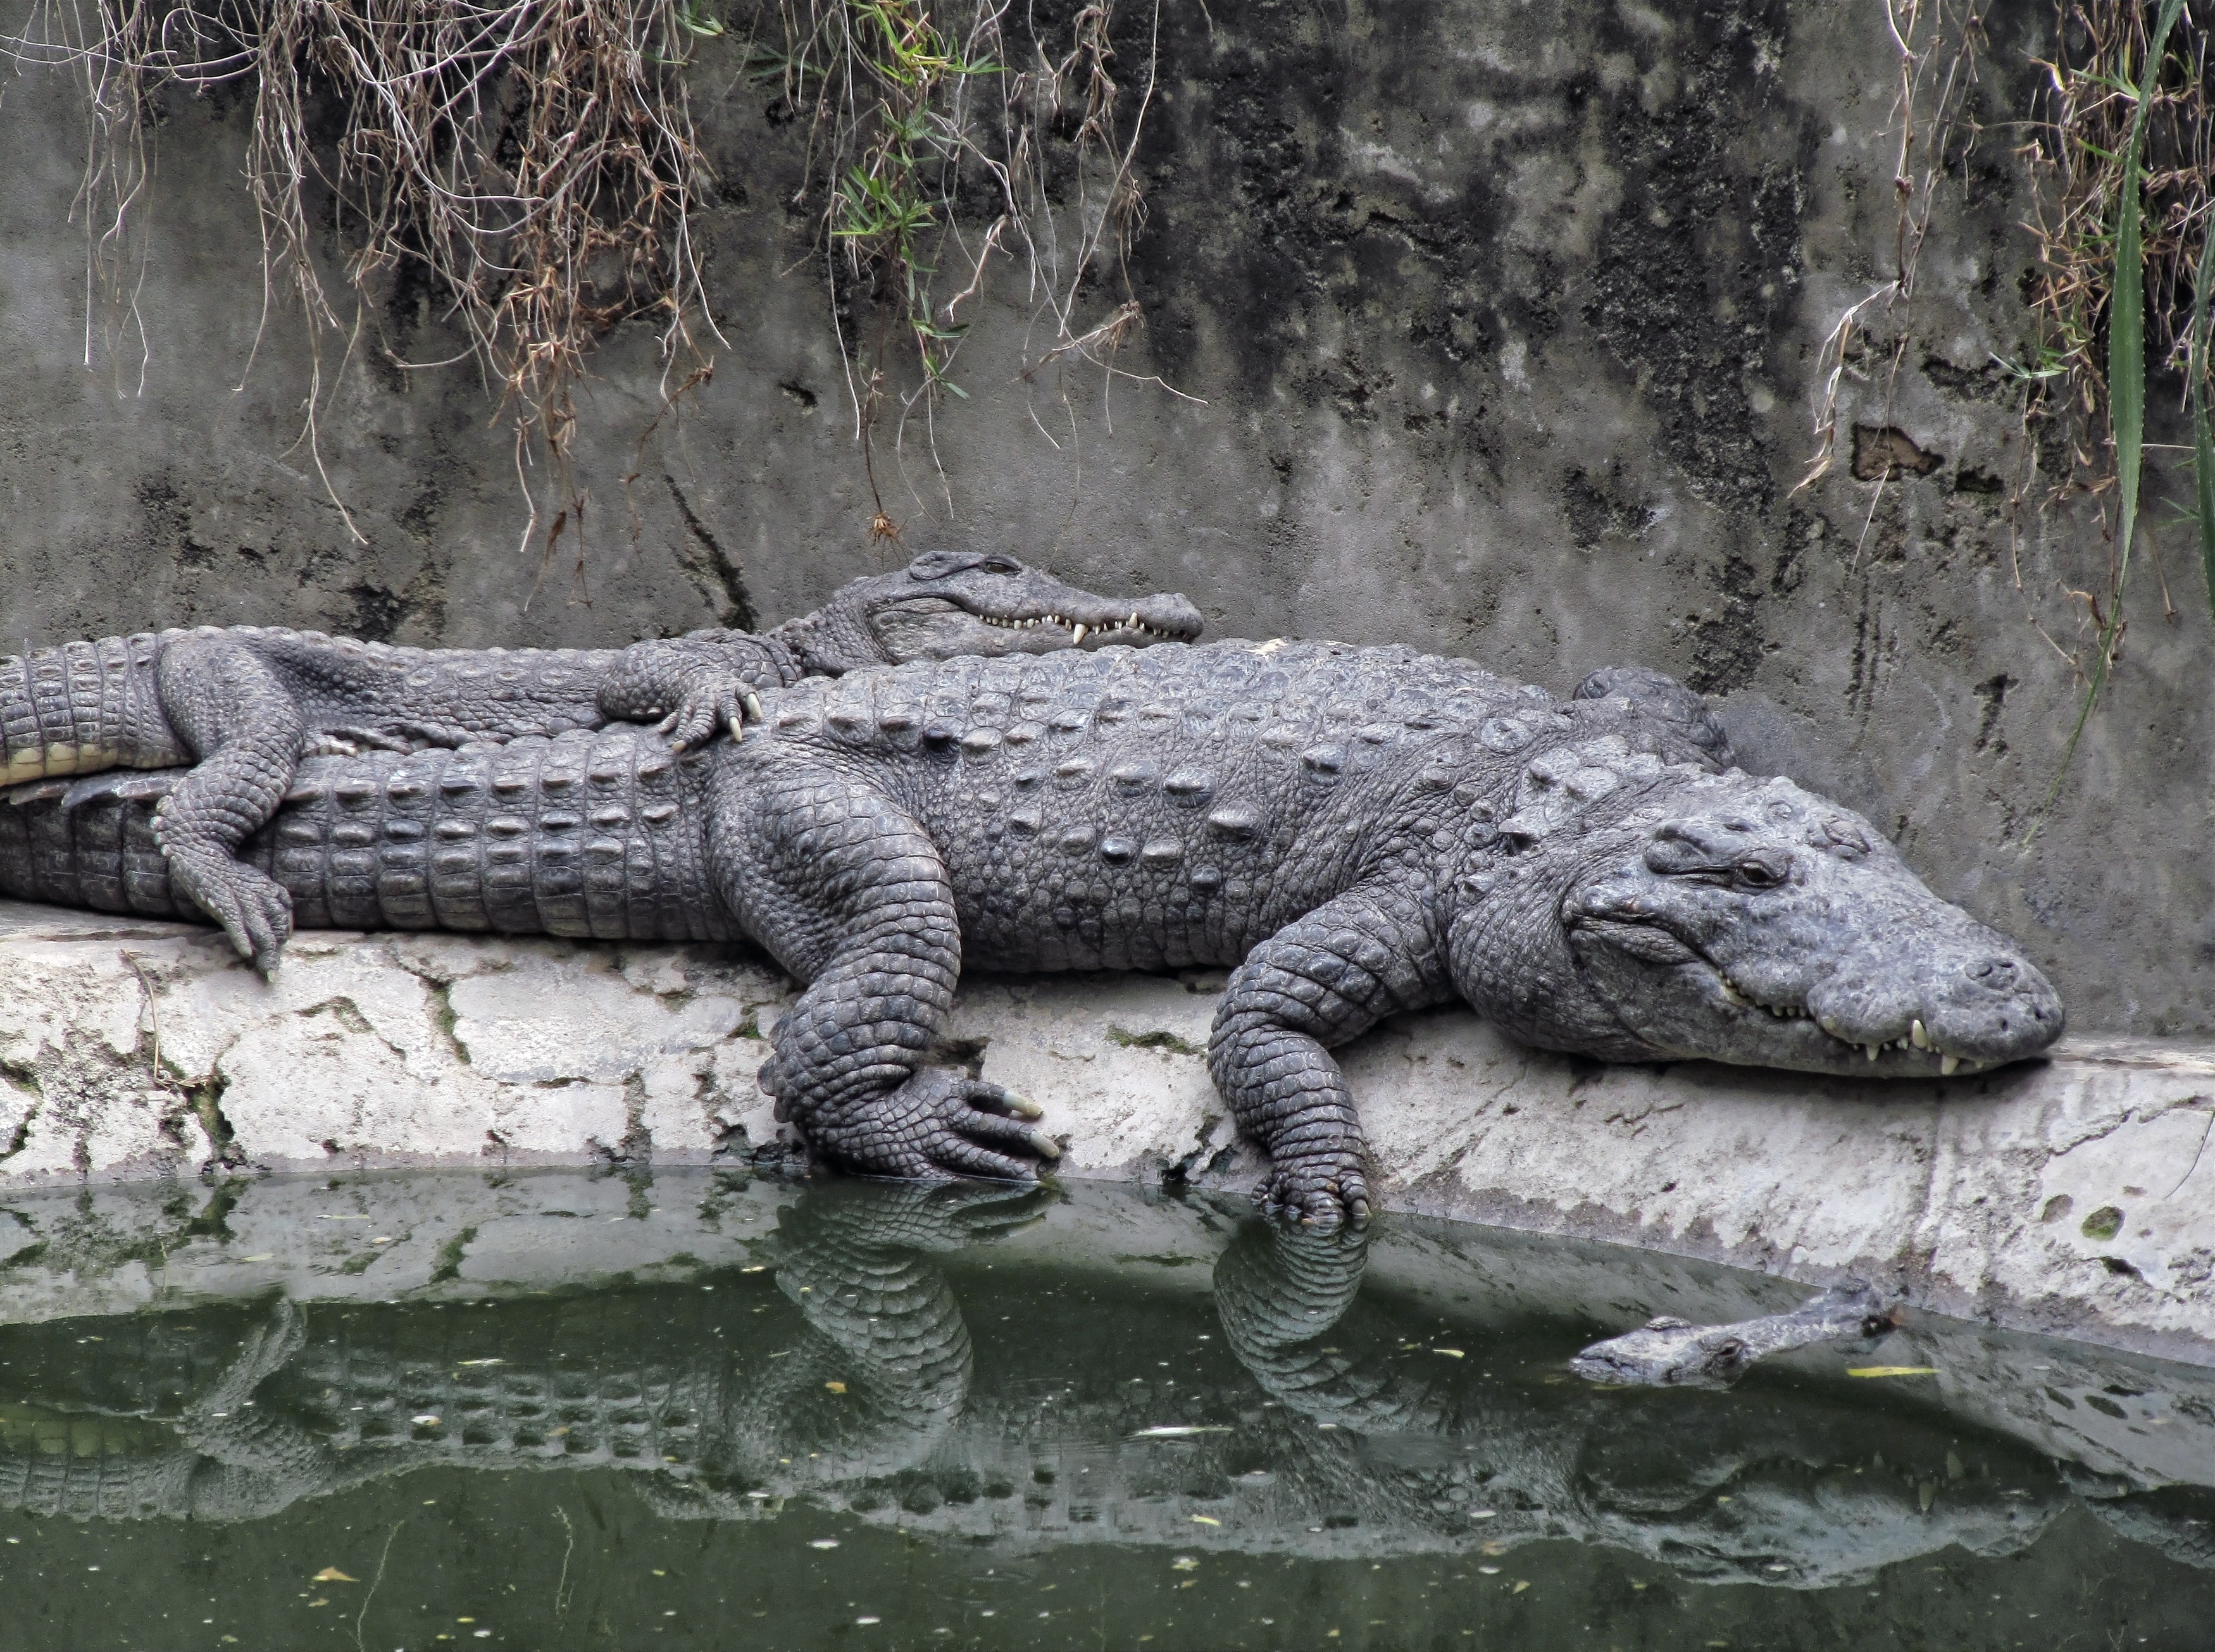 2 gray crocodiles